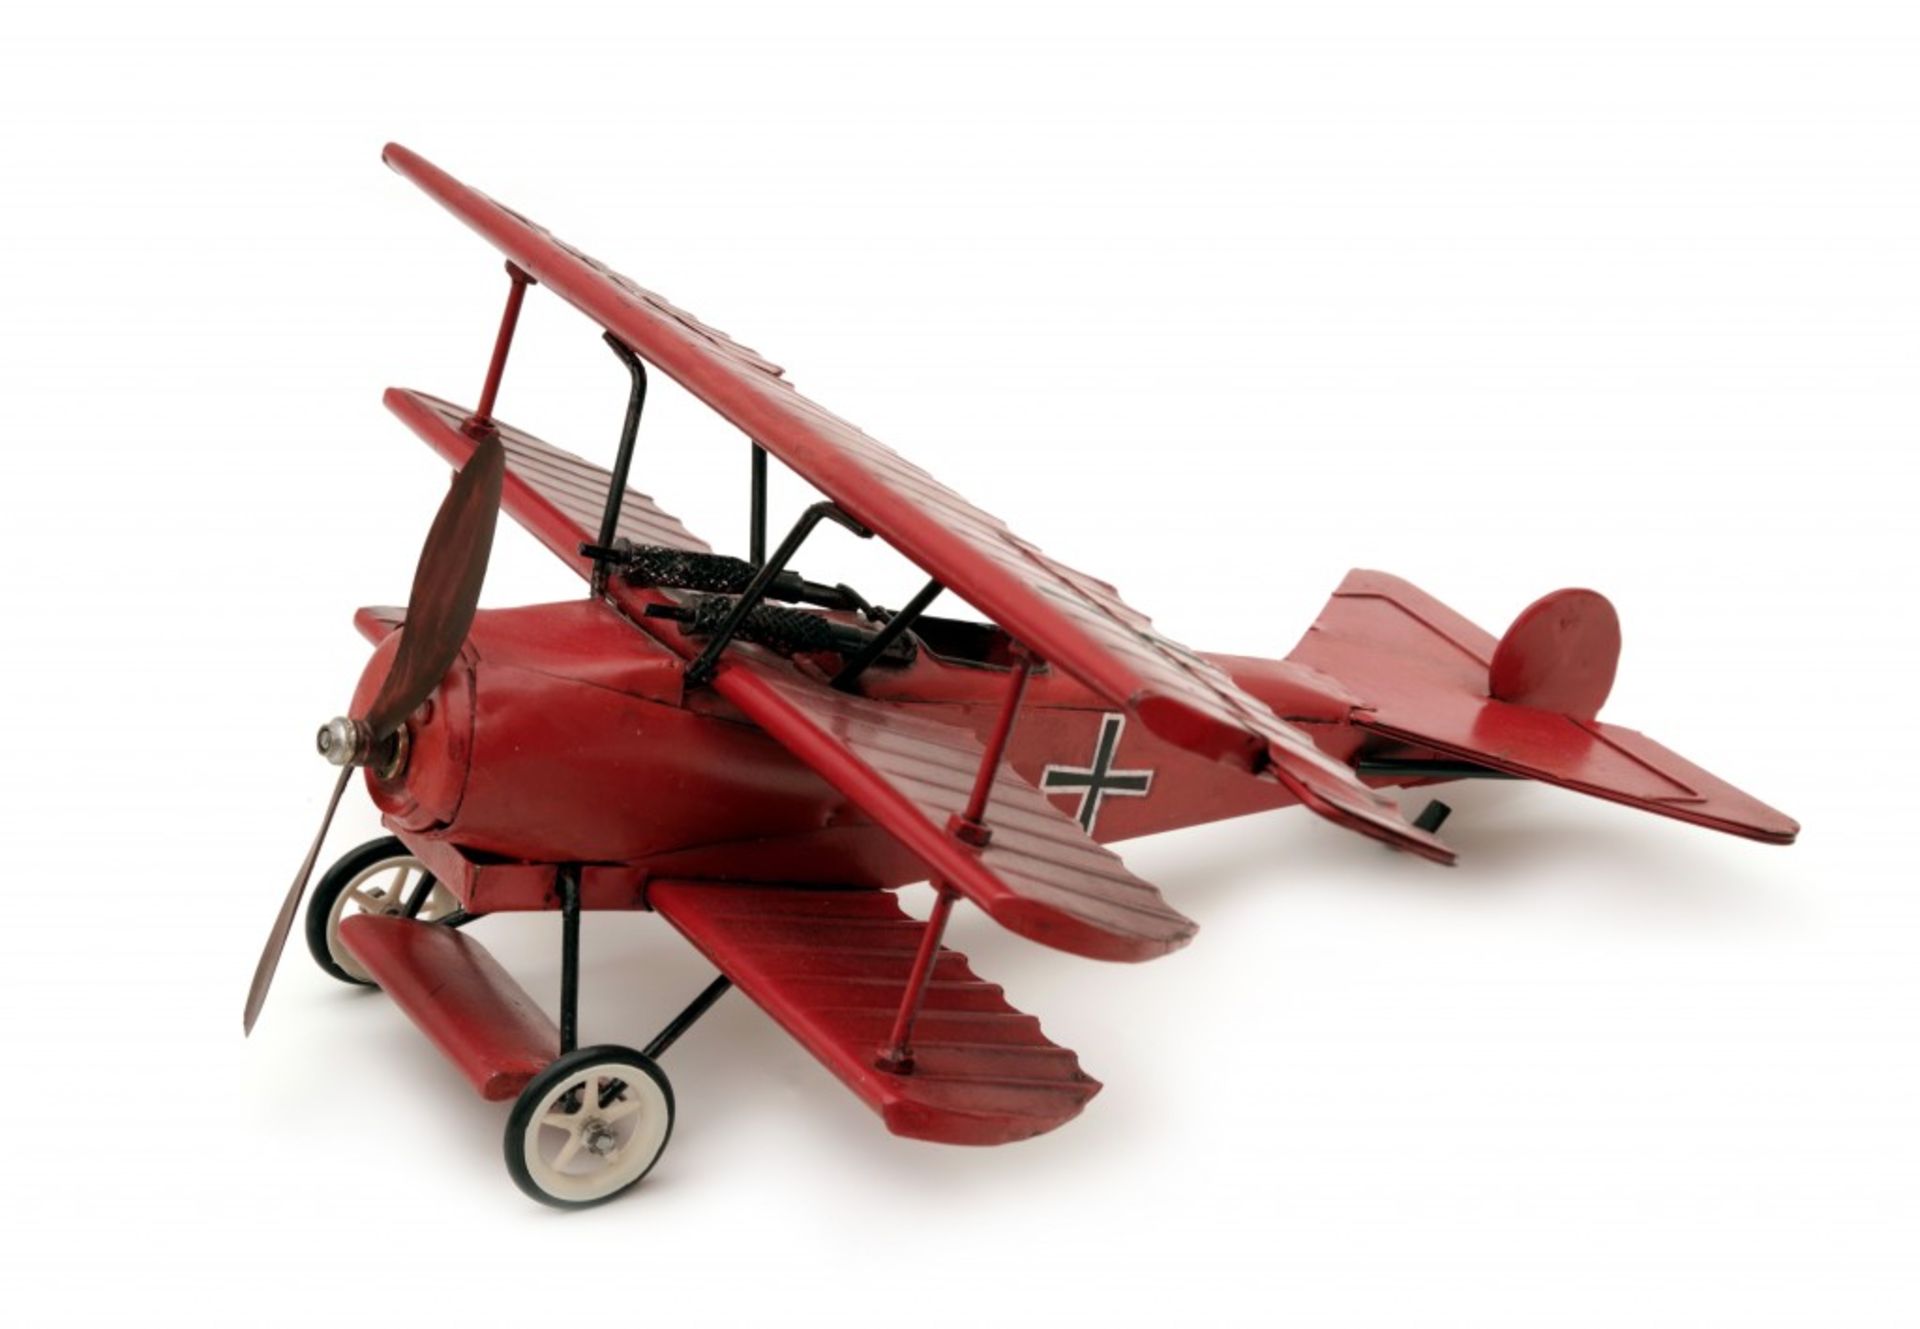 The Fokker Dr.I Dreidecker Plane - Red Baron